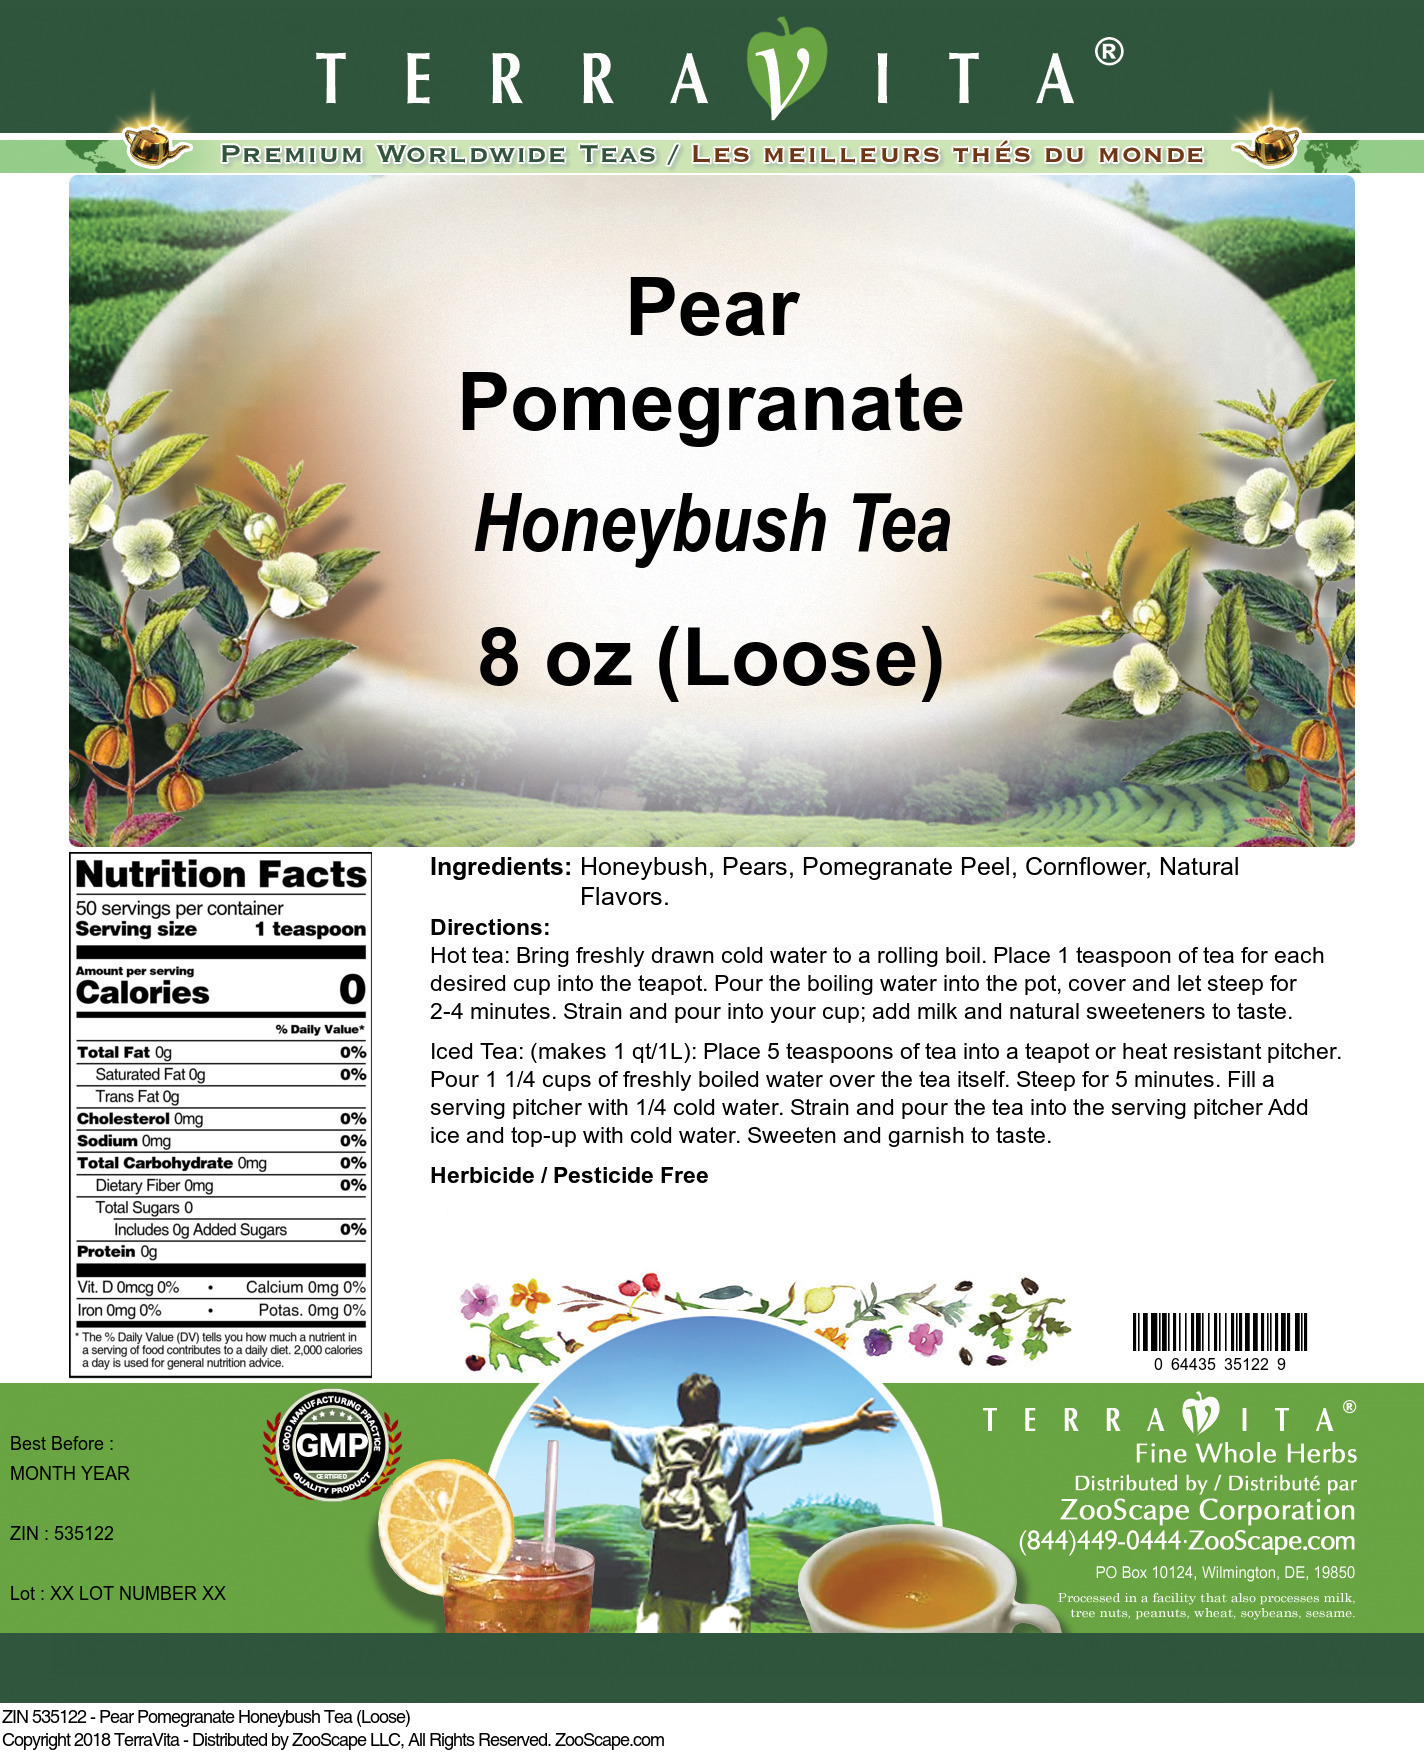 Pear Pomegranate Honeybush Tea (Loose) - Label